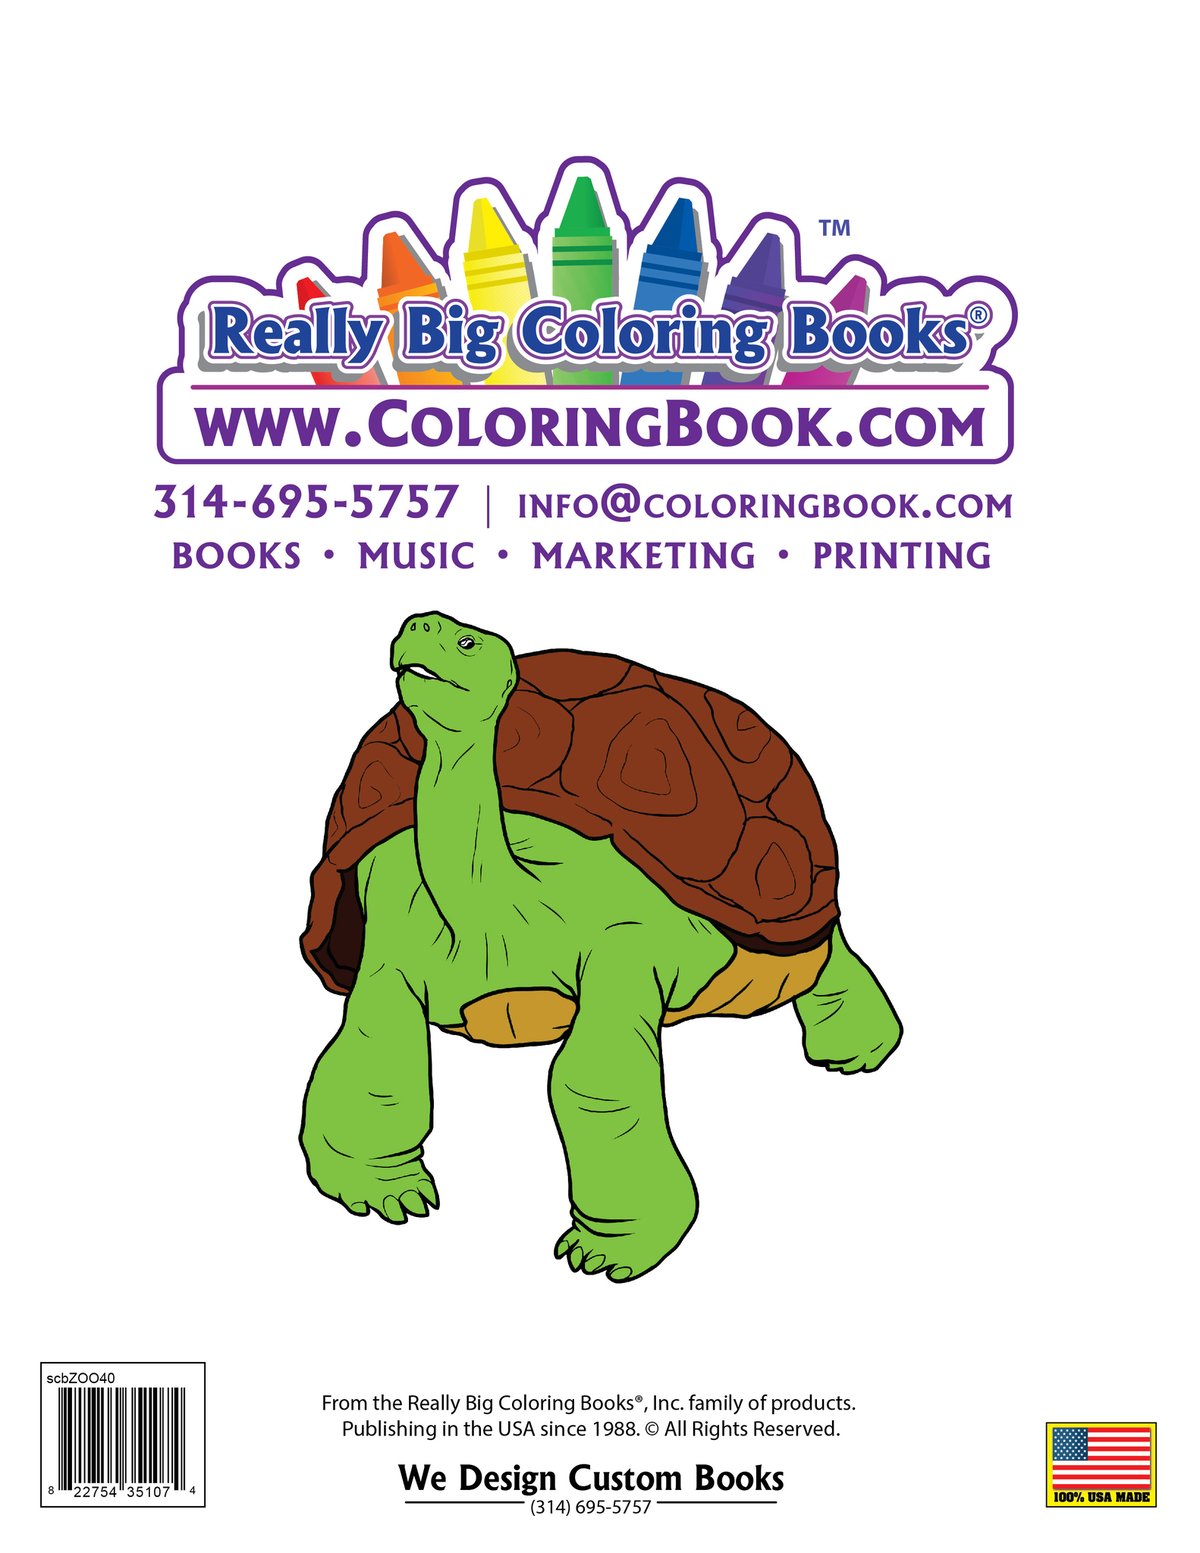 Coloring Books Custom Books - Publisher